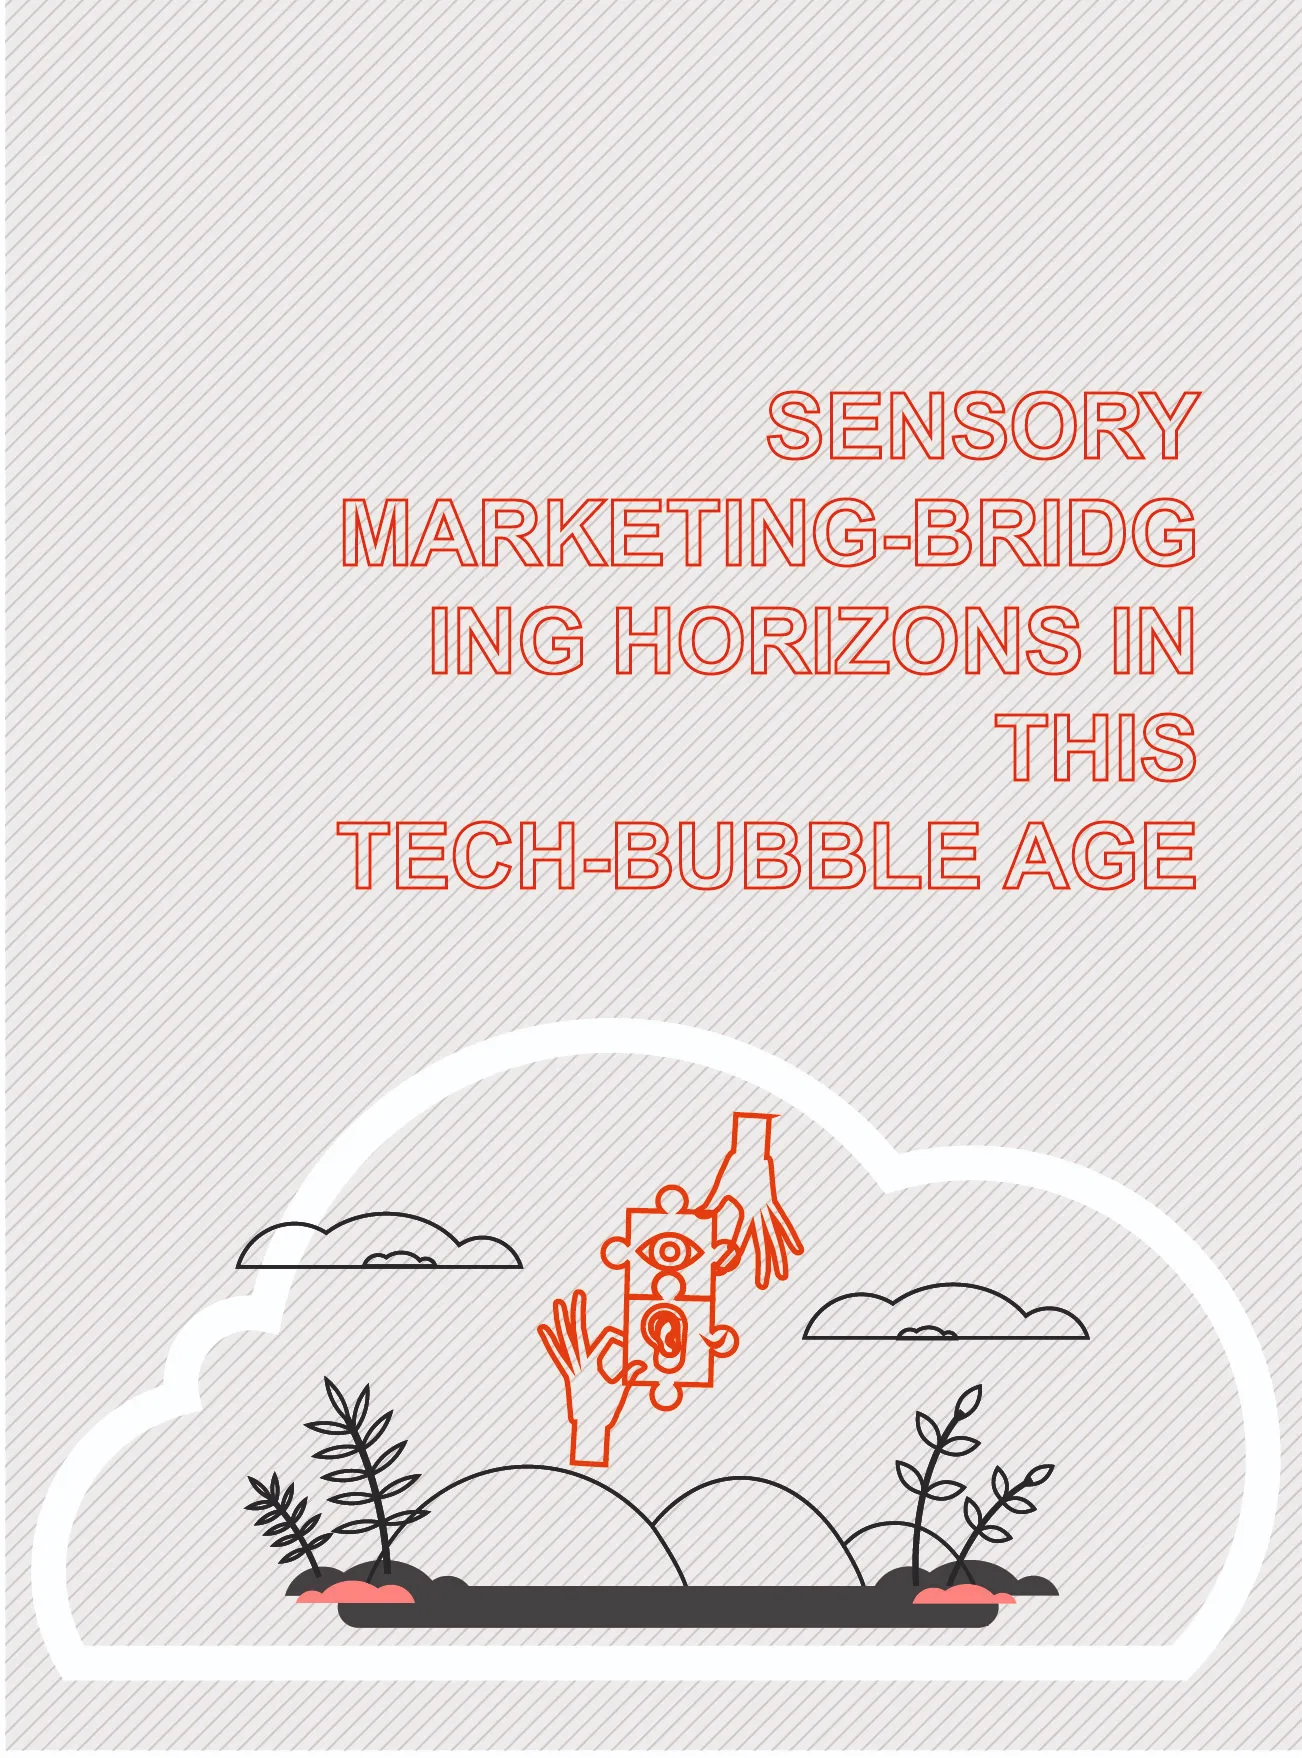 Sensory marketing – bridging horizons in this tech-bubble age